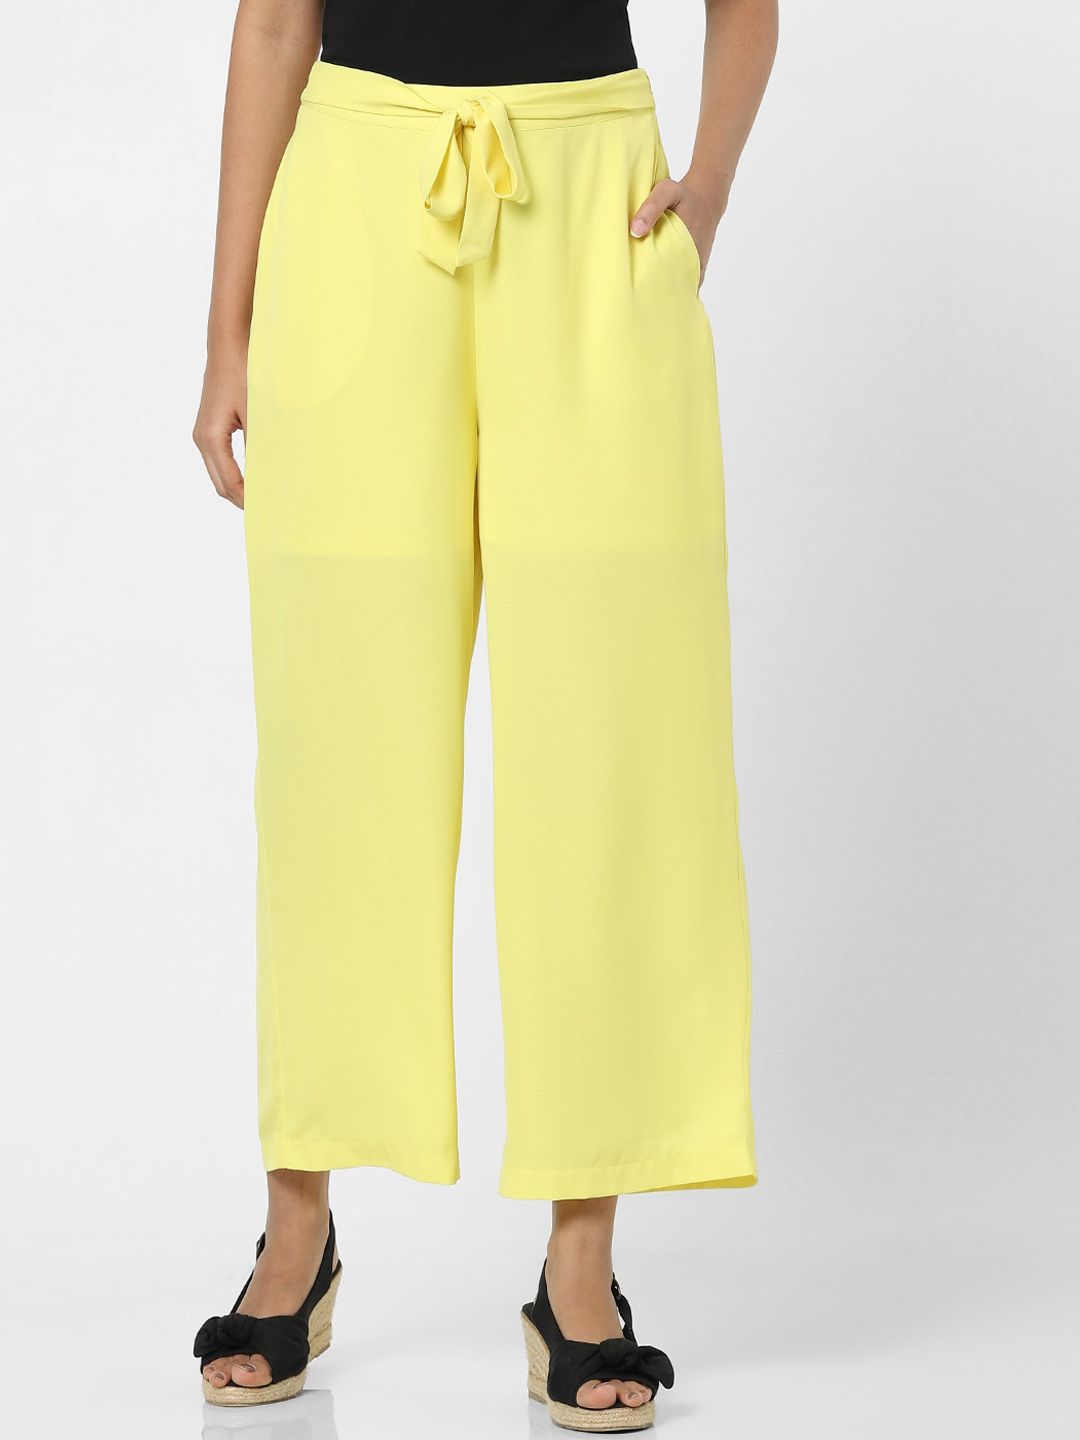 Vero Moda Women Yellow Trousers Price in India